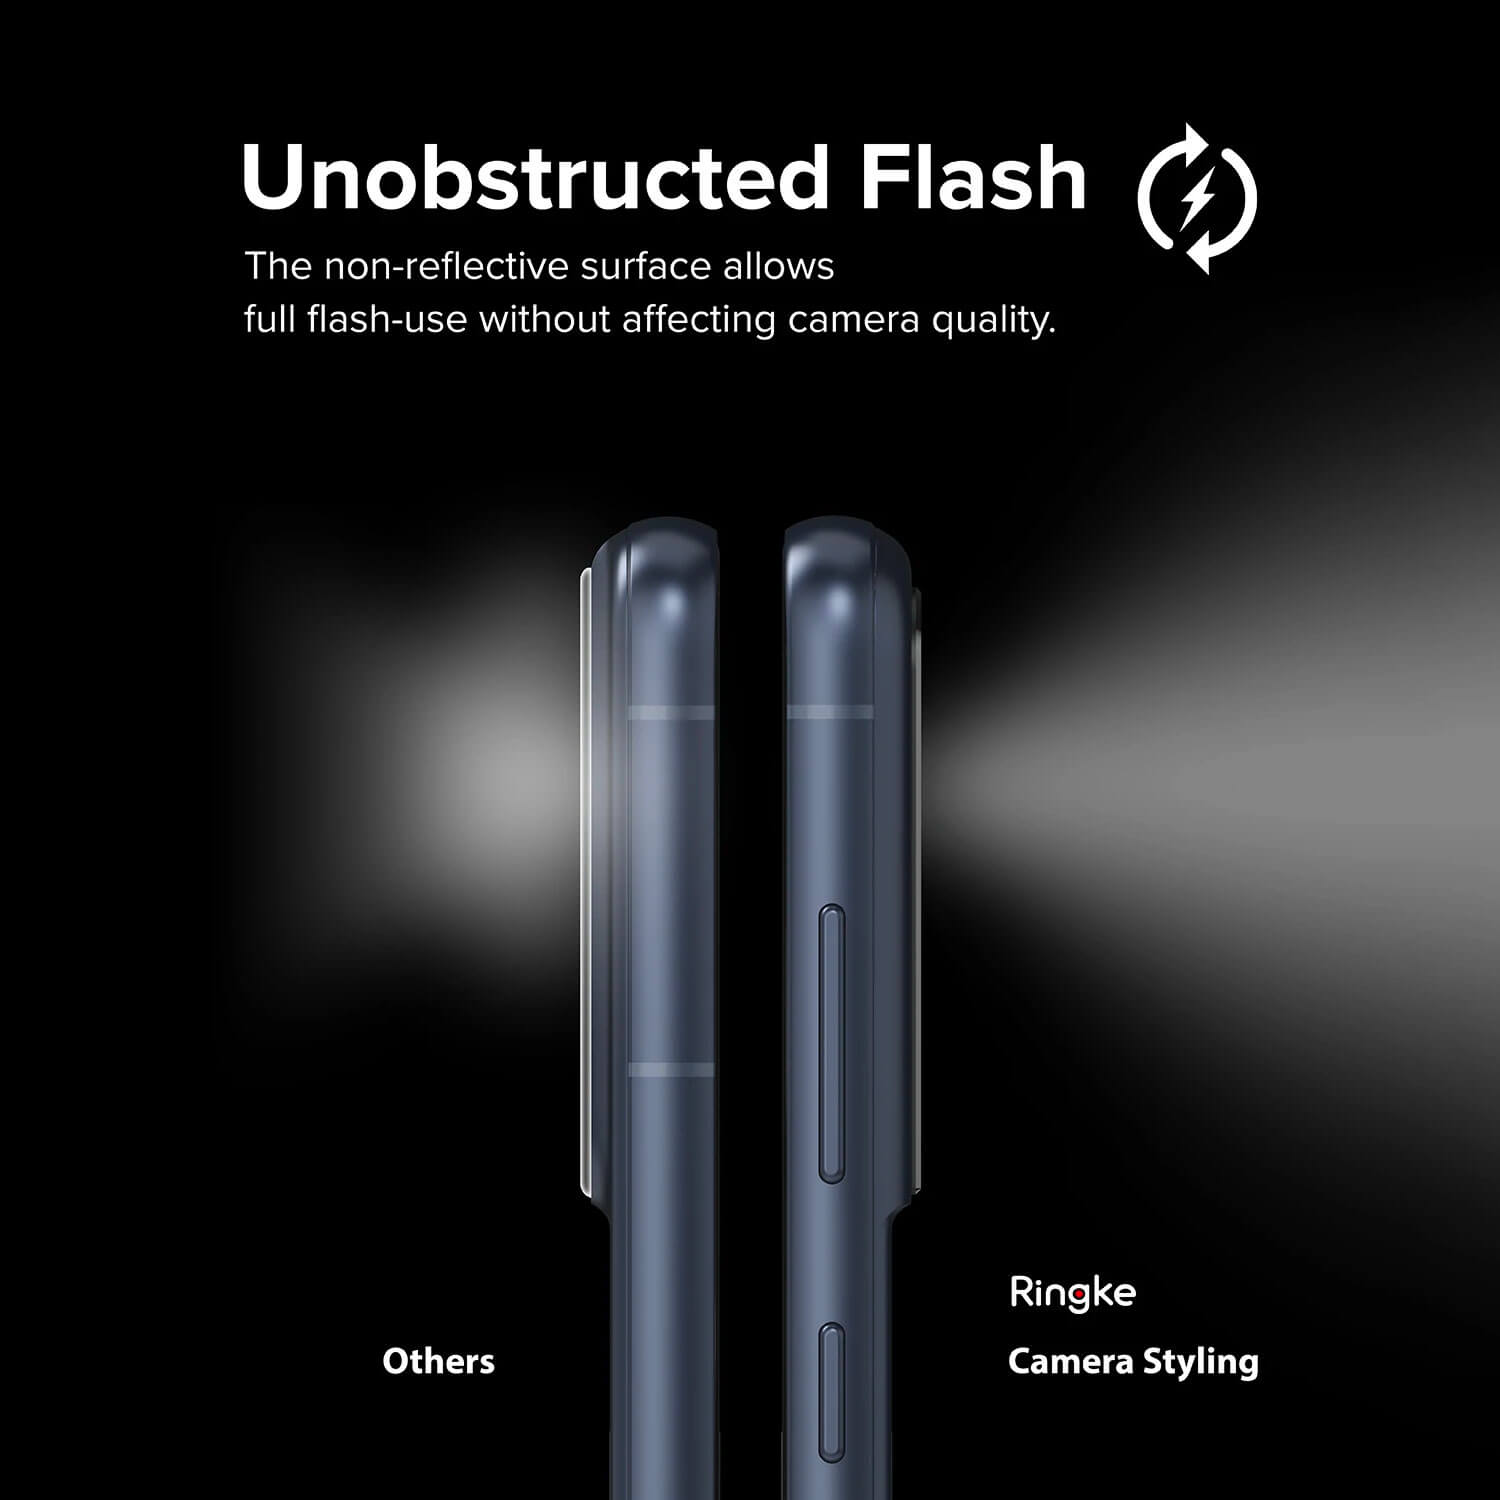 Ringke Samsung Galaxy S21 FE 5G Camera Styling Protector Black